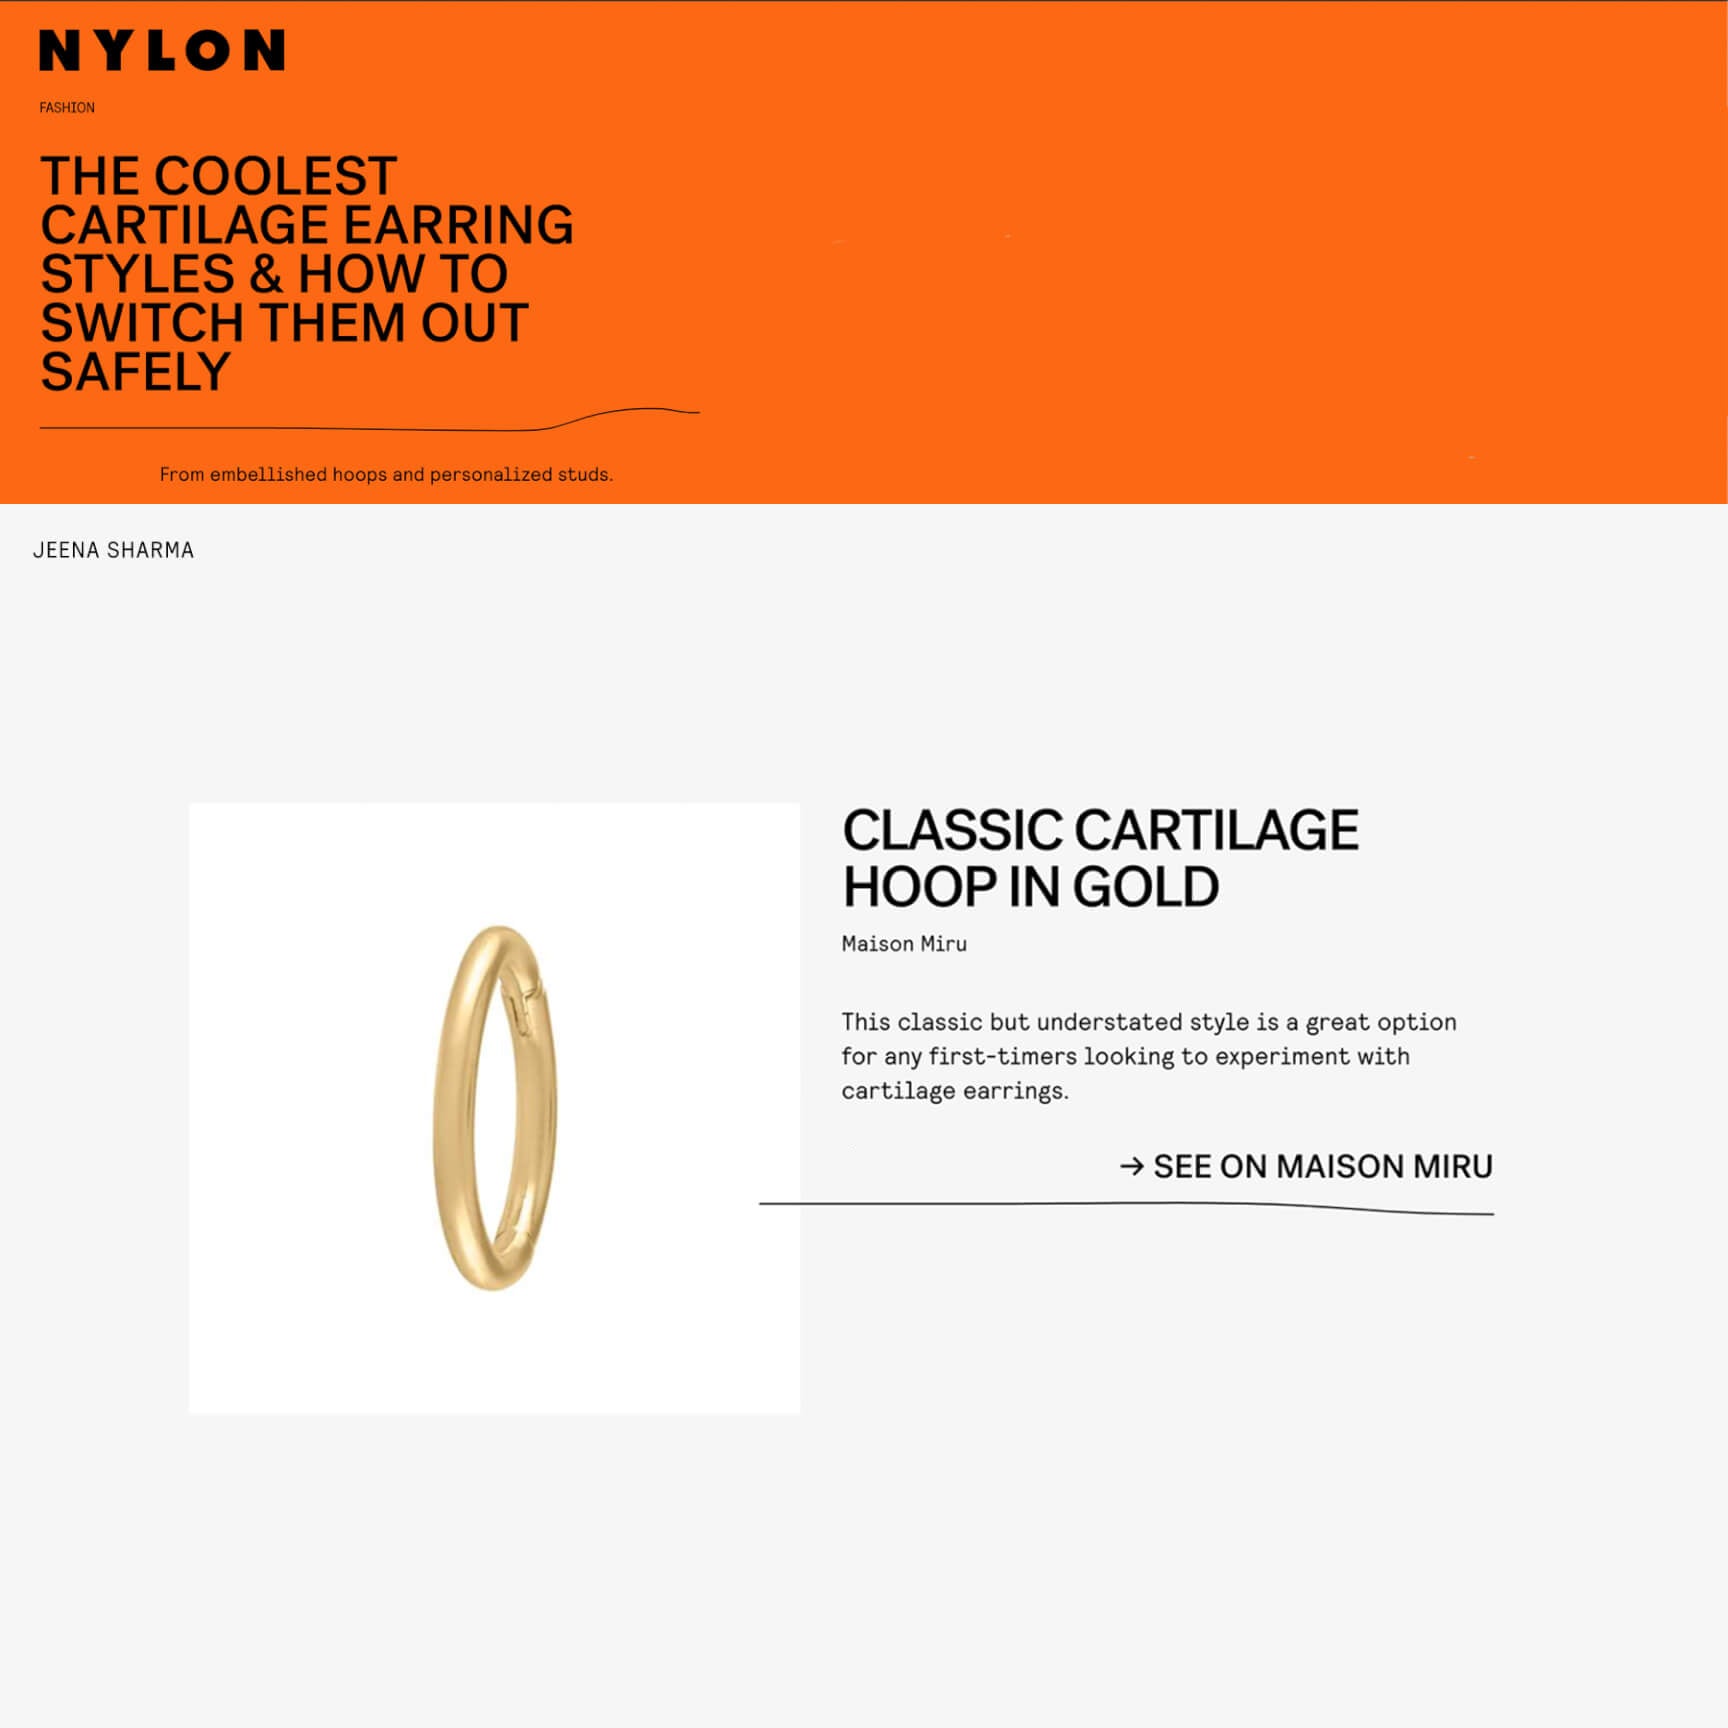 Classic Cartilage Hoop as seen in Nylon